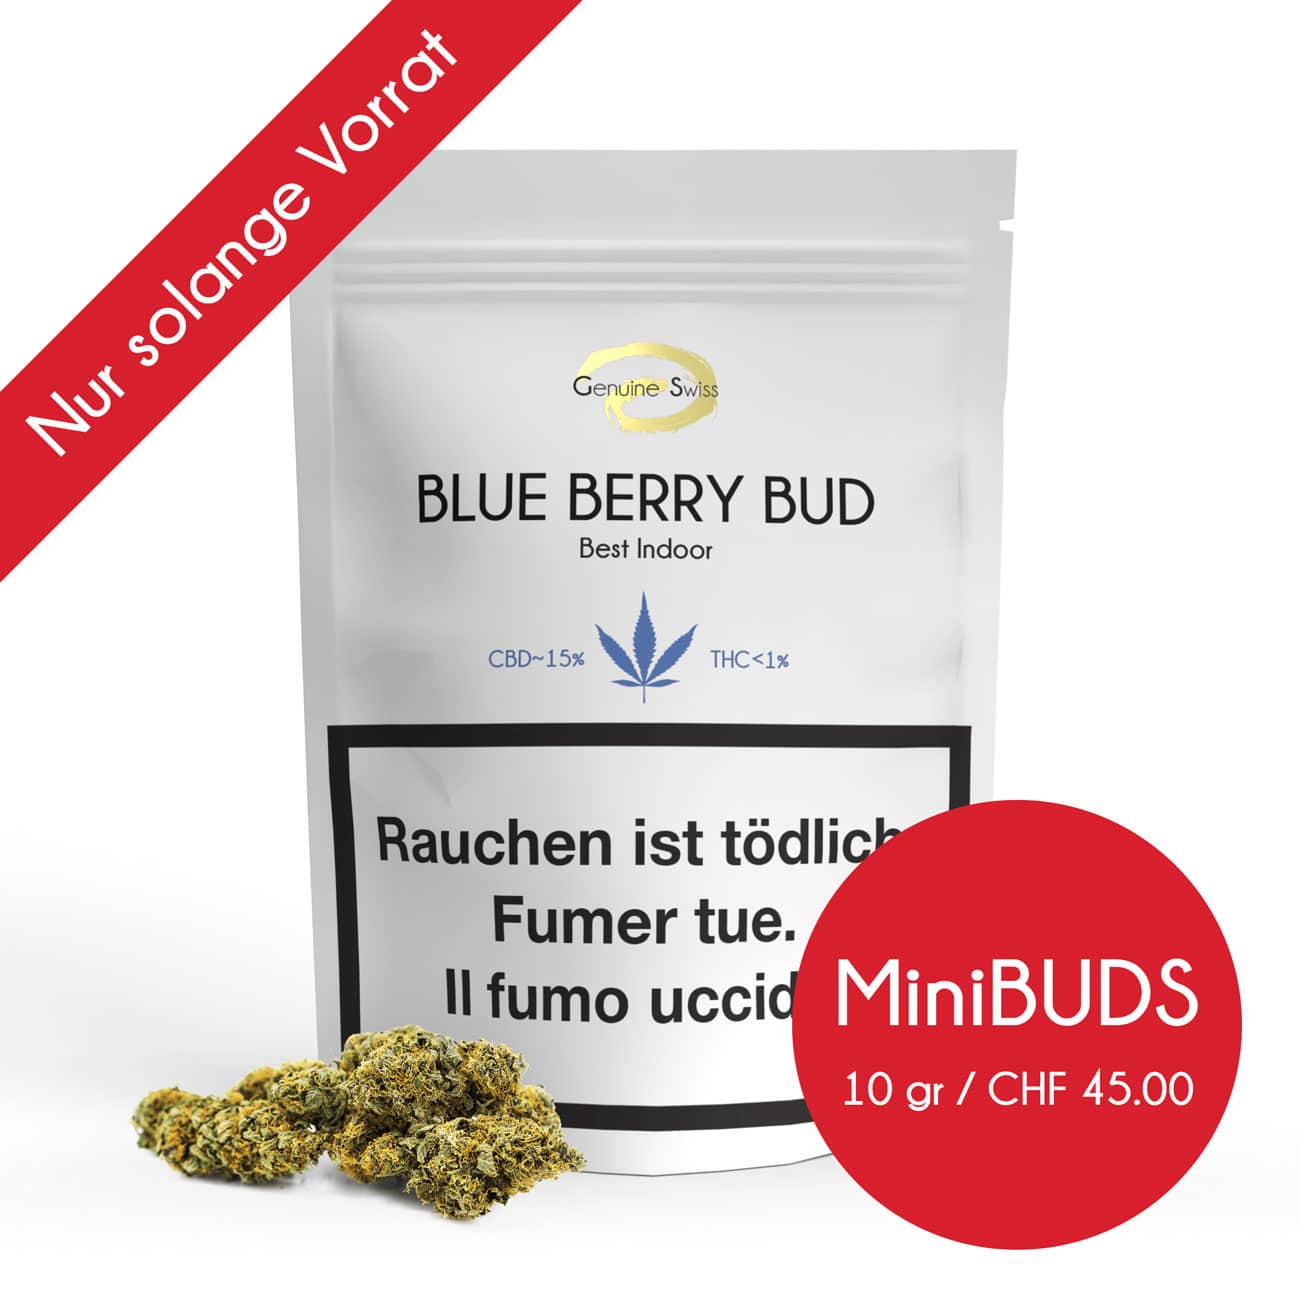 Genuine Swiss Blue Berry Minibuds, Legal Cannabis